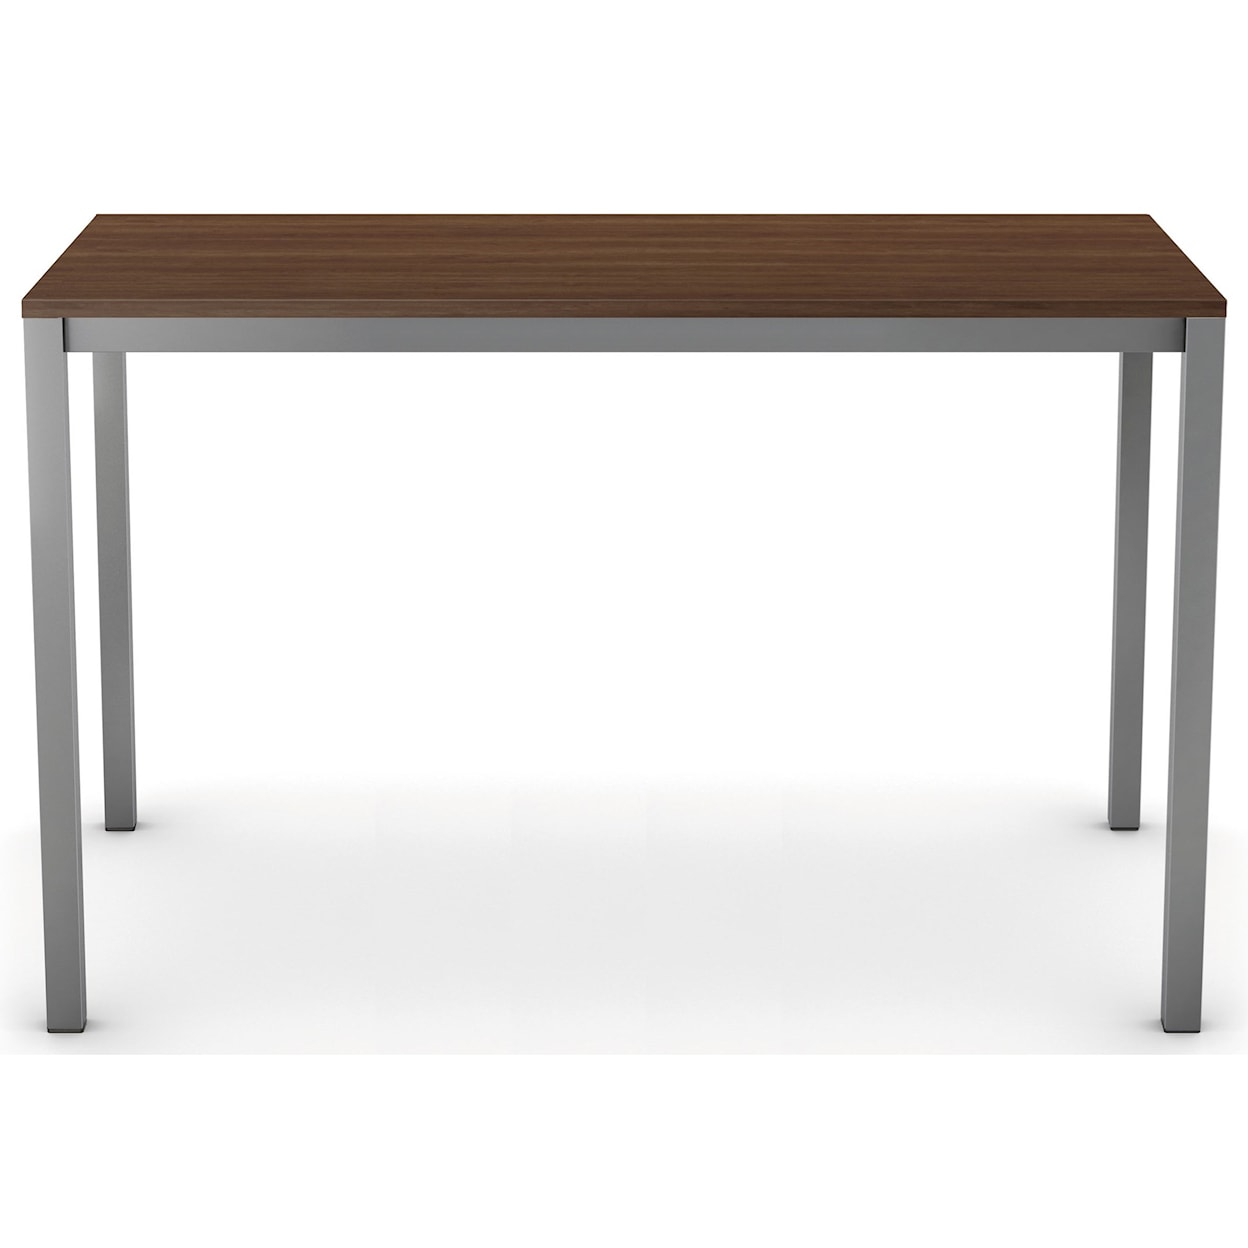 Amisco Urban Ricard-Wood Counter Table